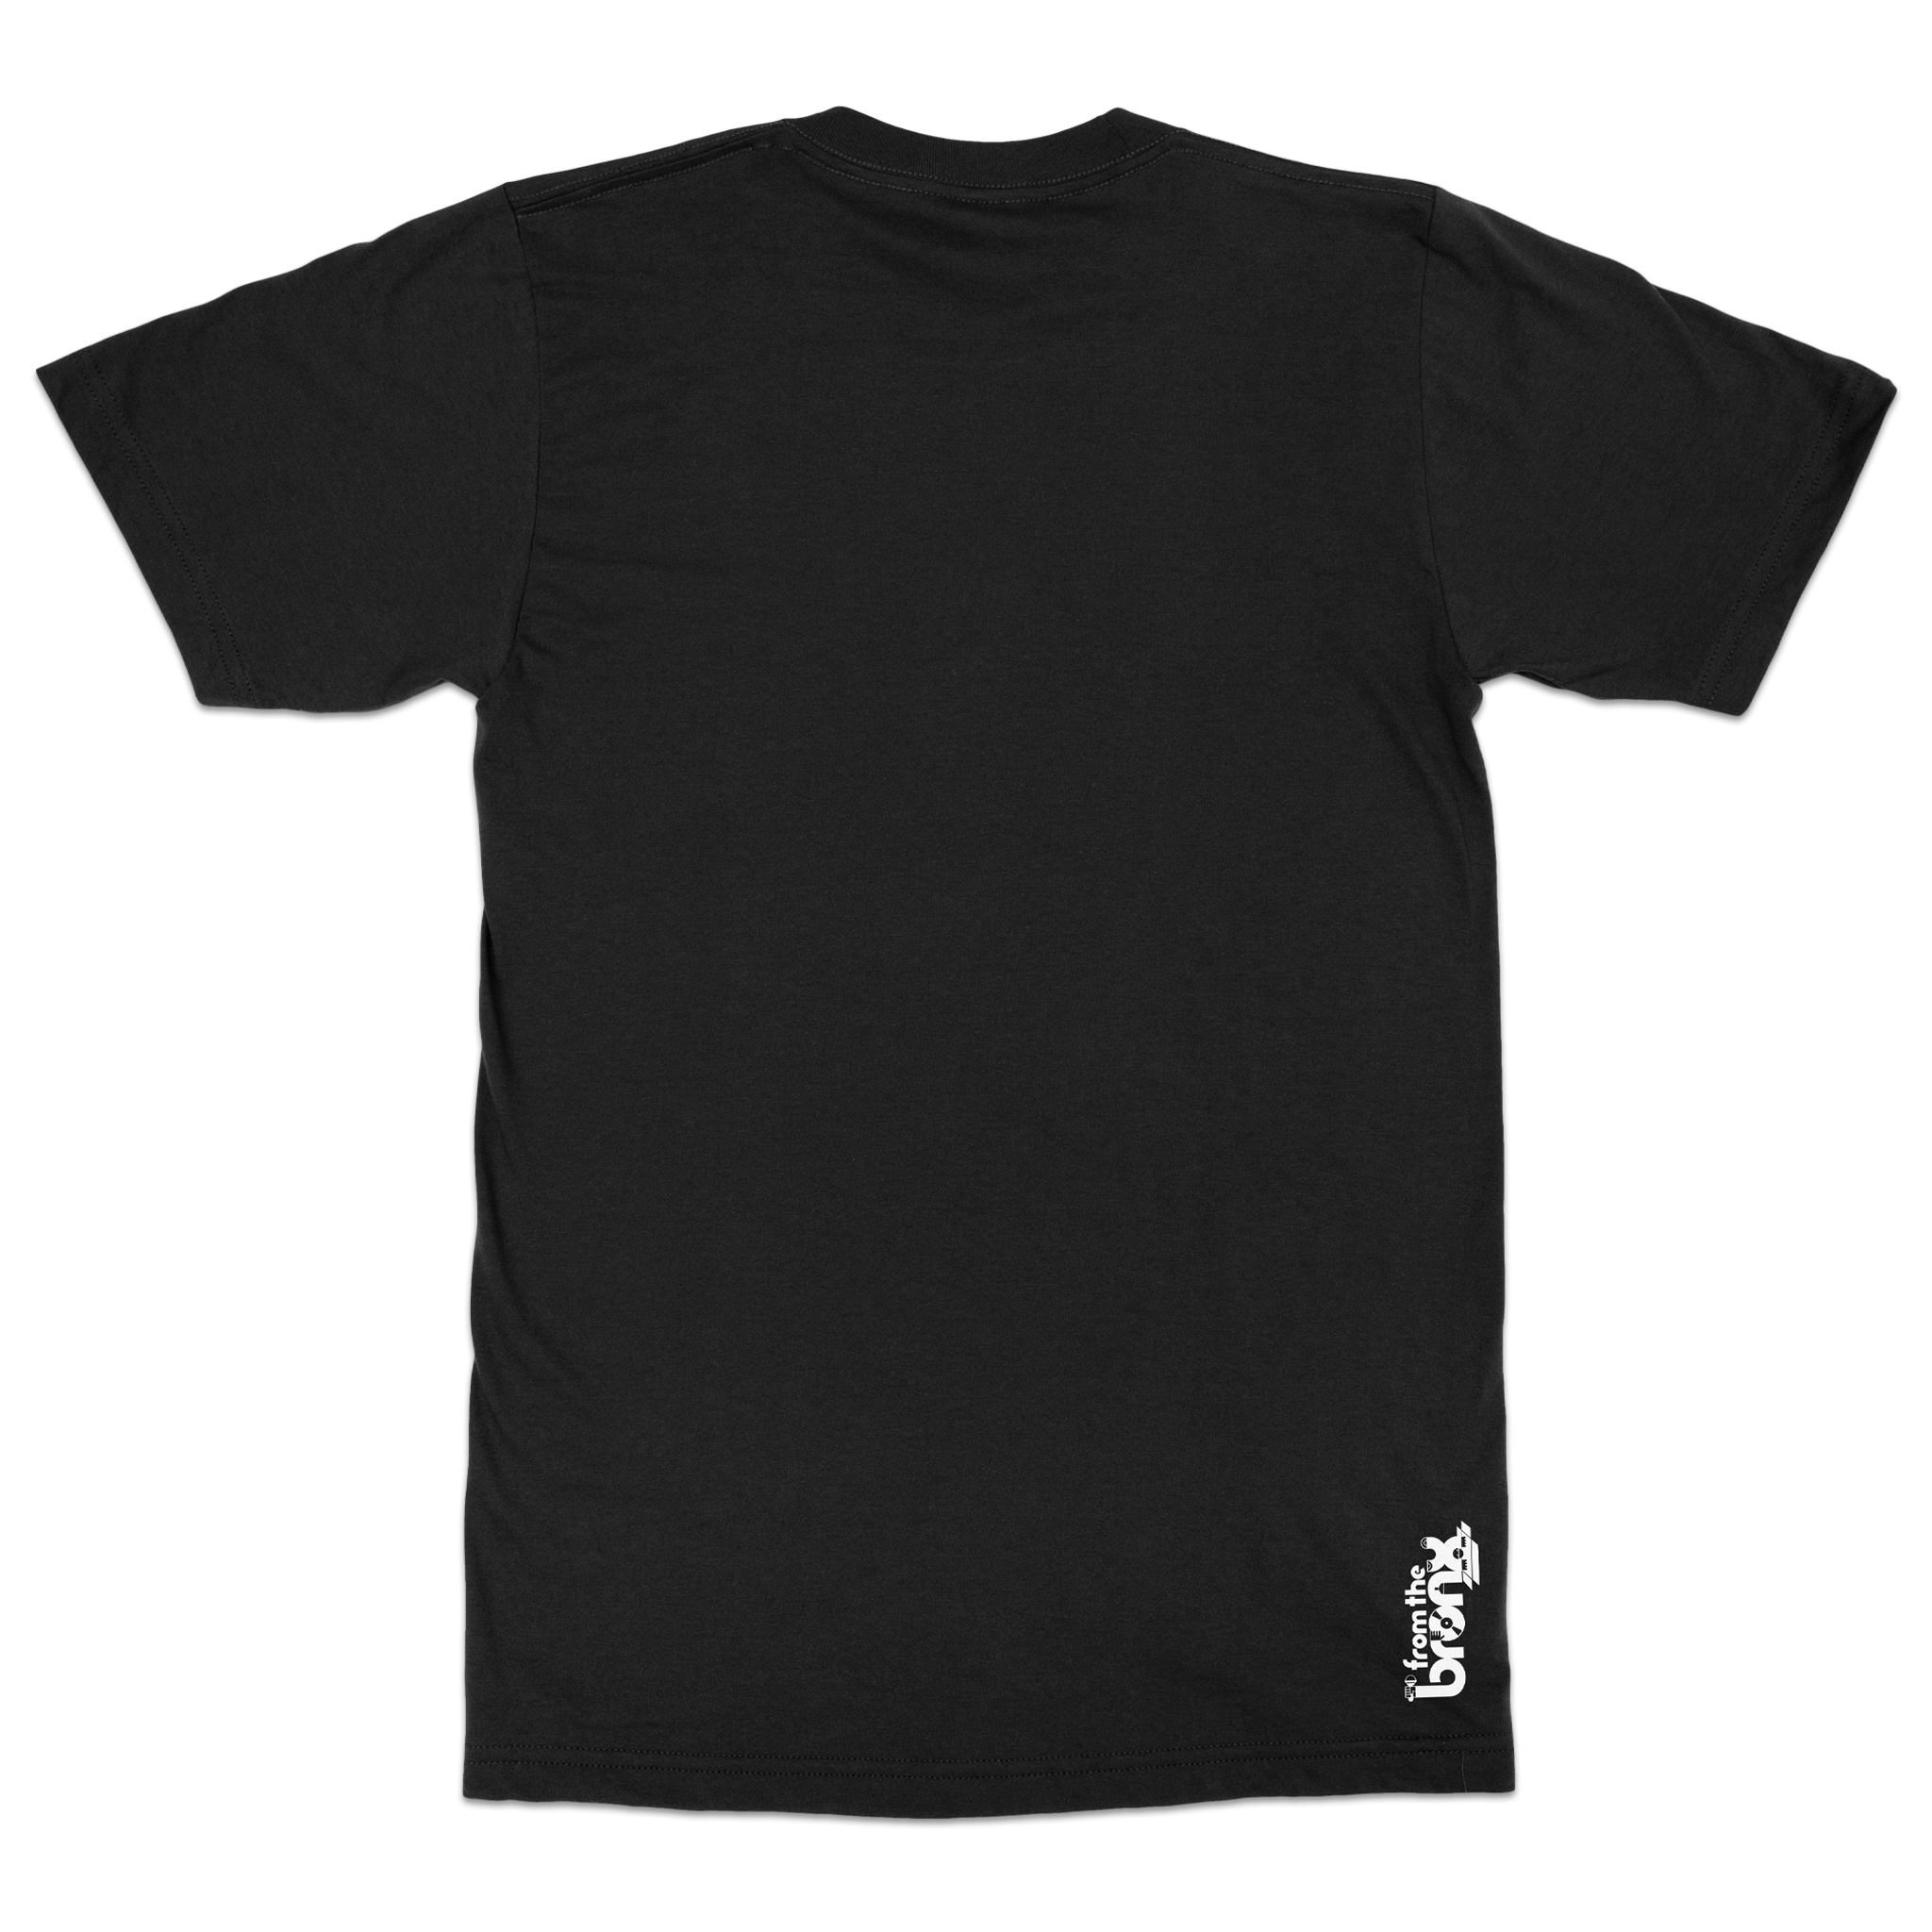 Bronx Collegiate T-Shirt Black with White Design Front